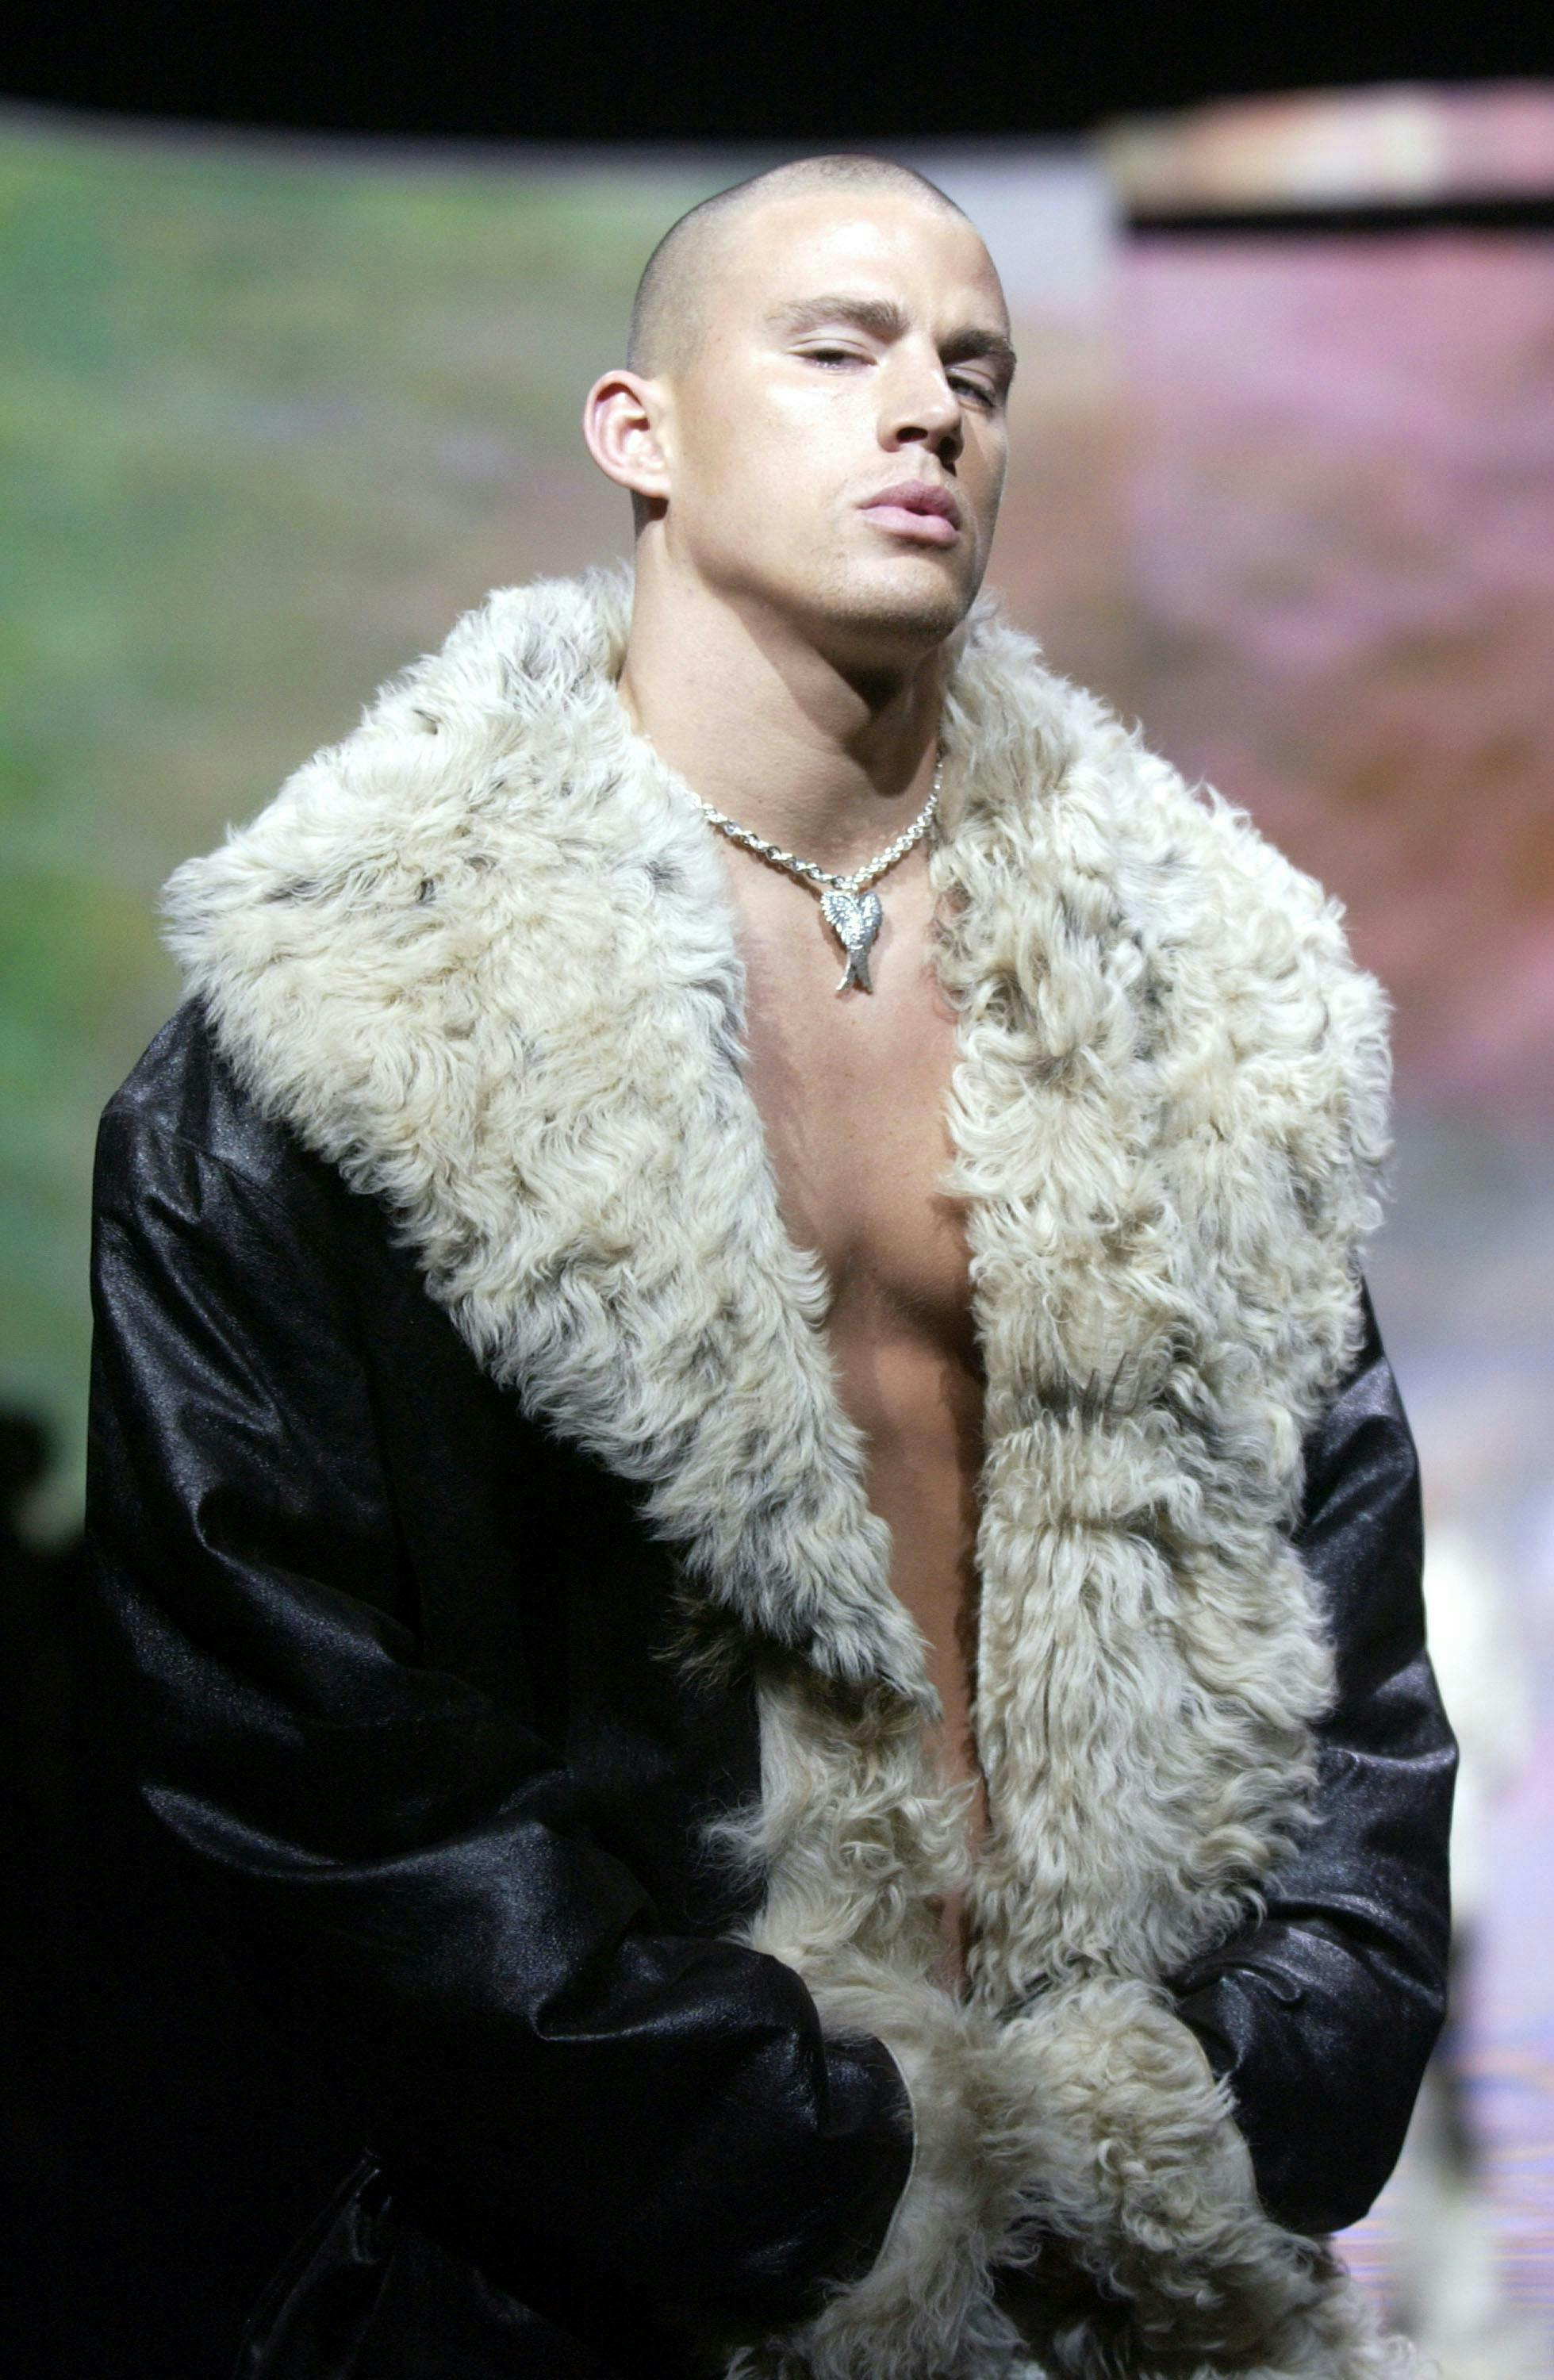 Channing Tatum wears black, leather coat with fur trim.